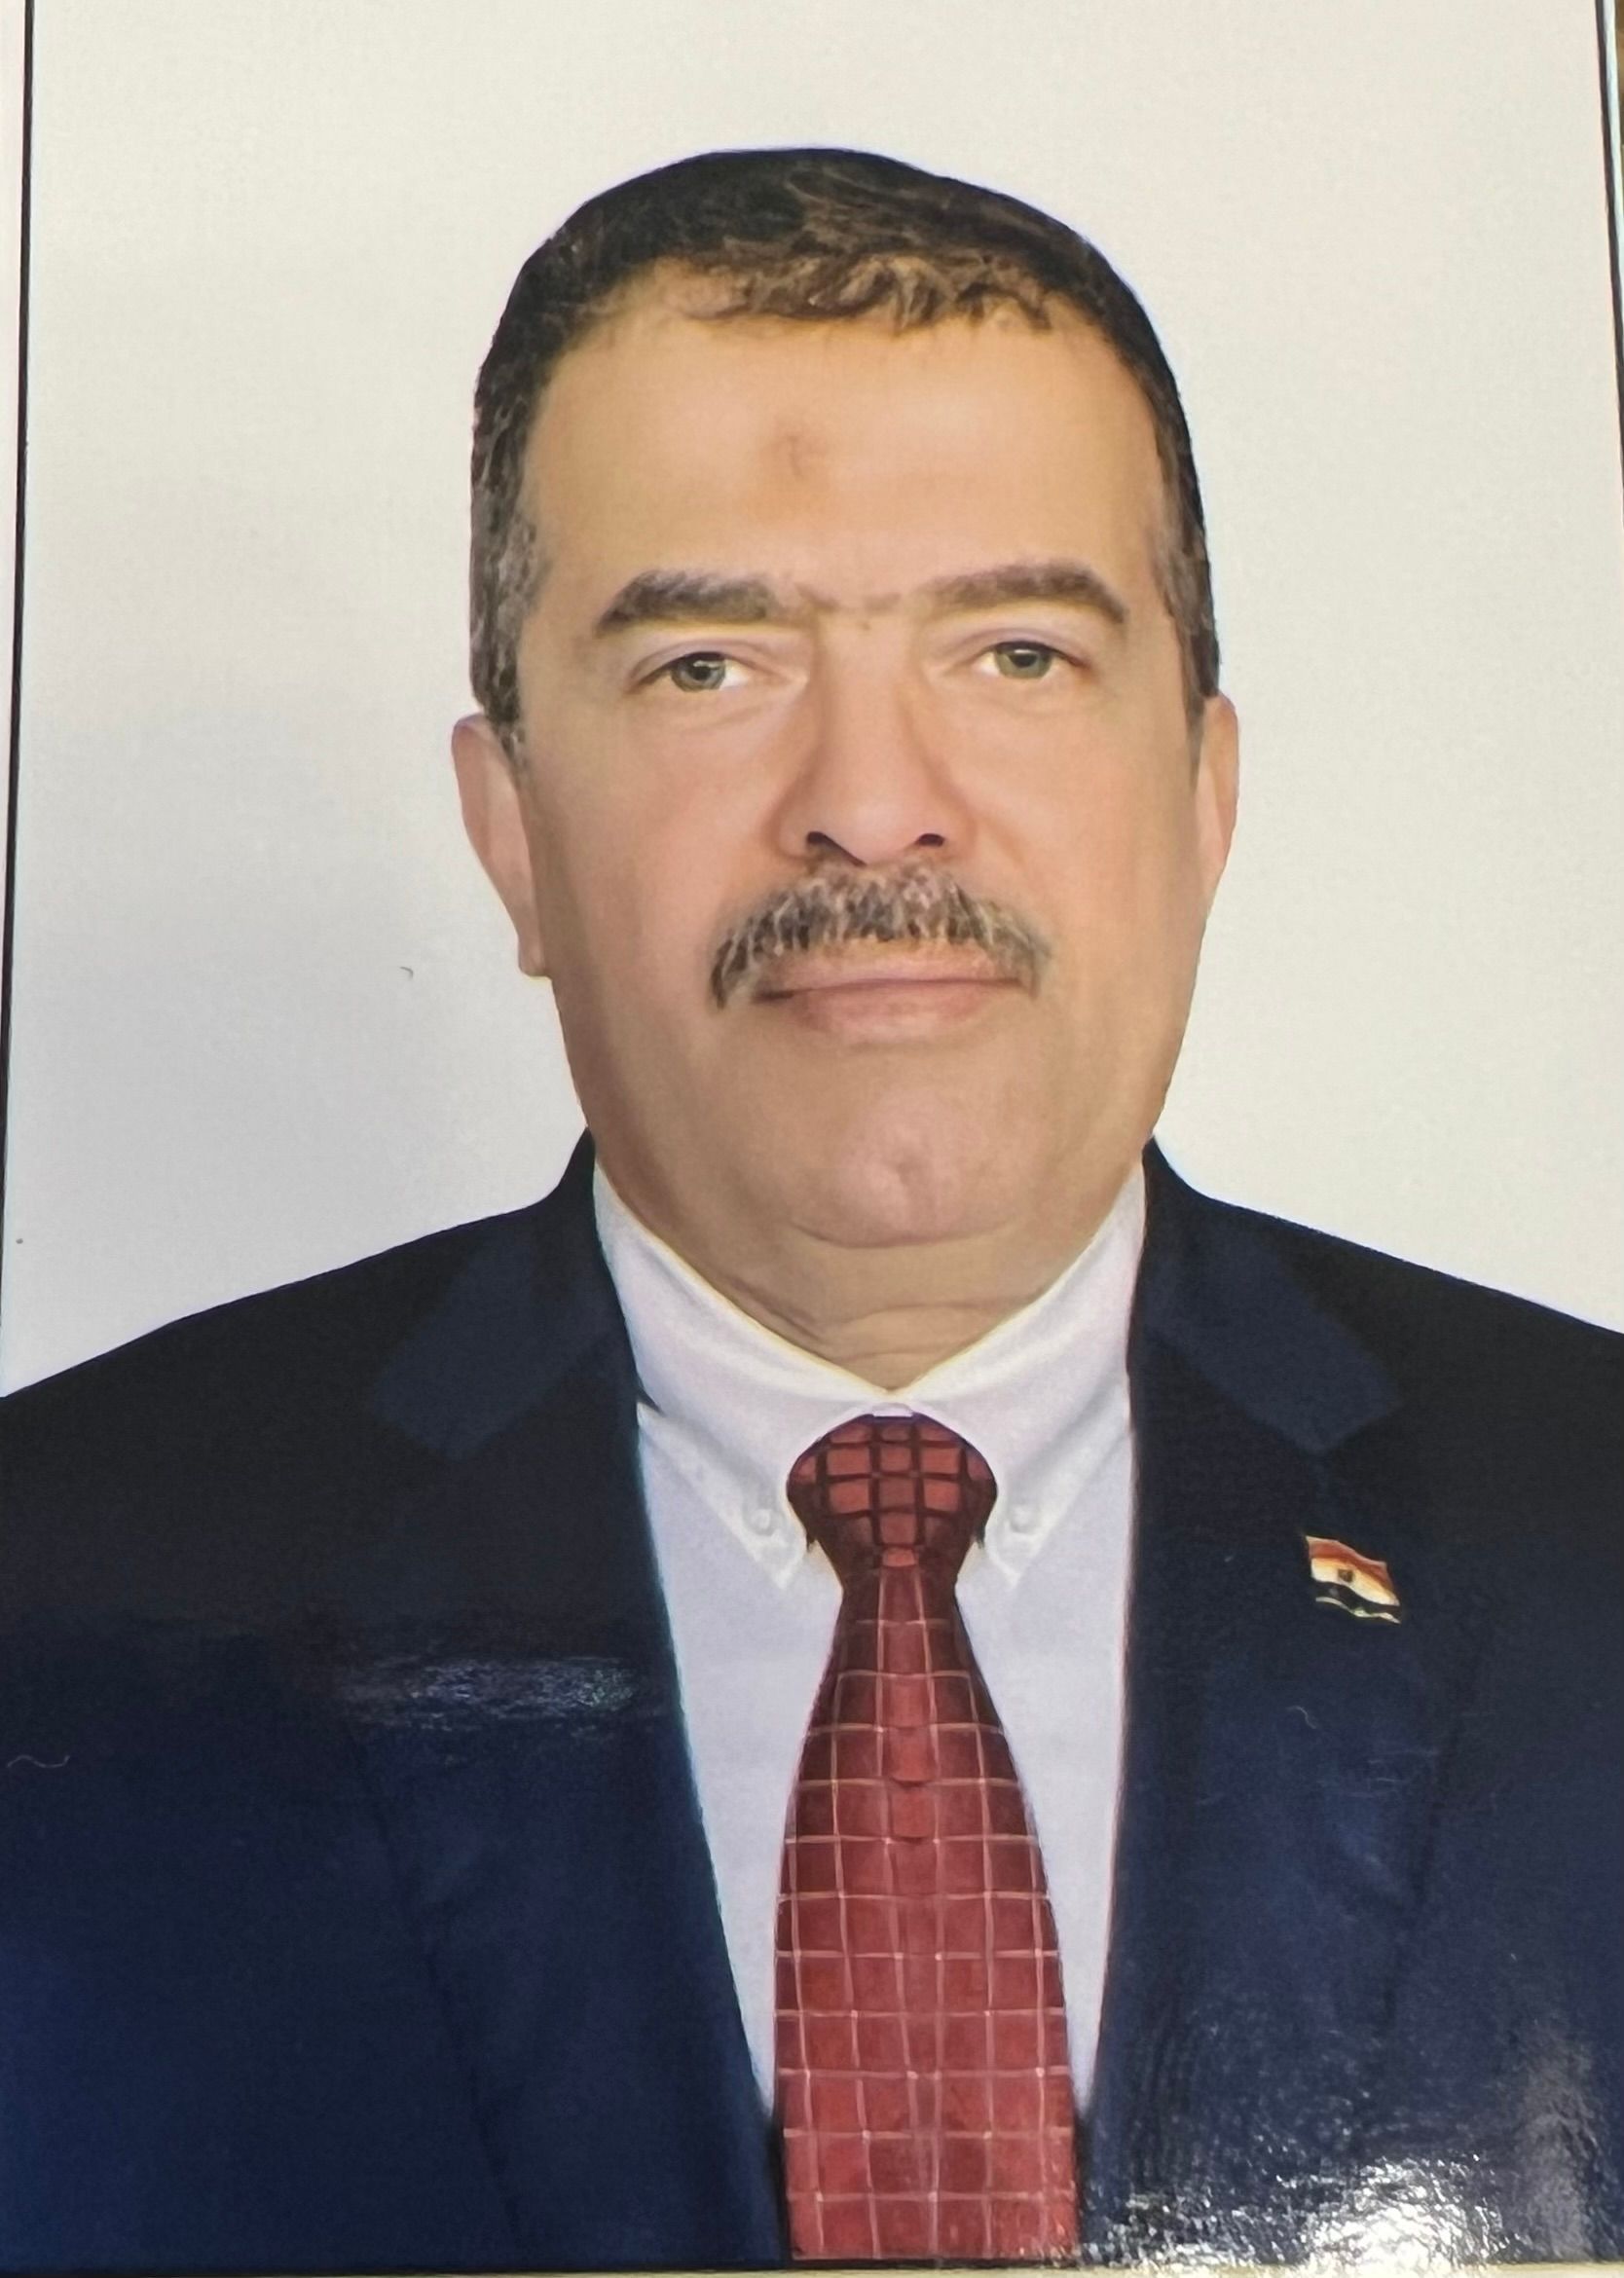 Mohammed Mahmoud Hussein Elsisi